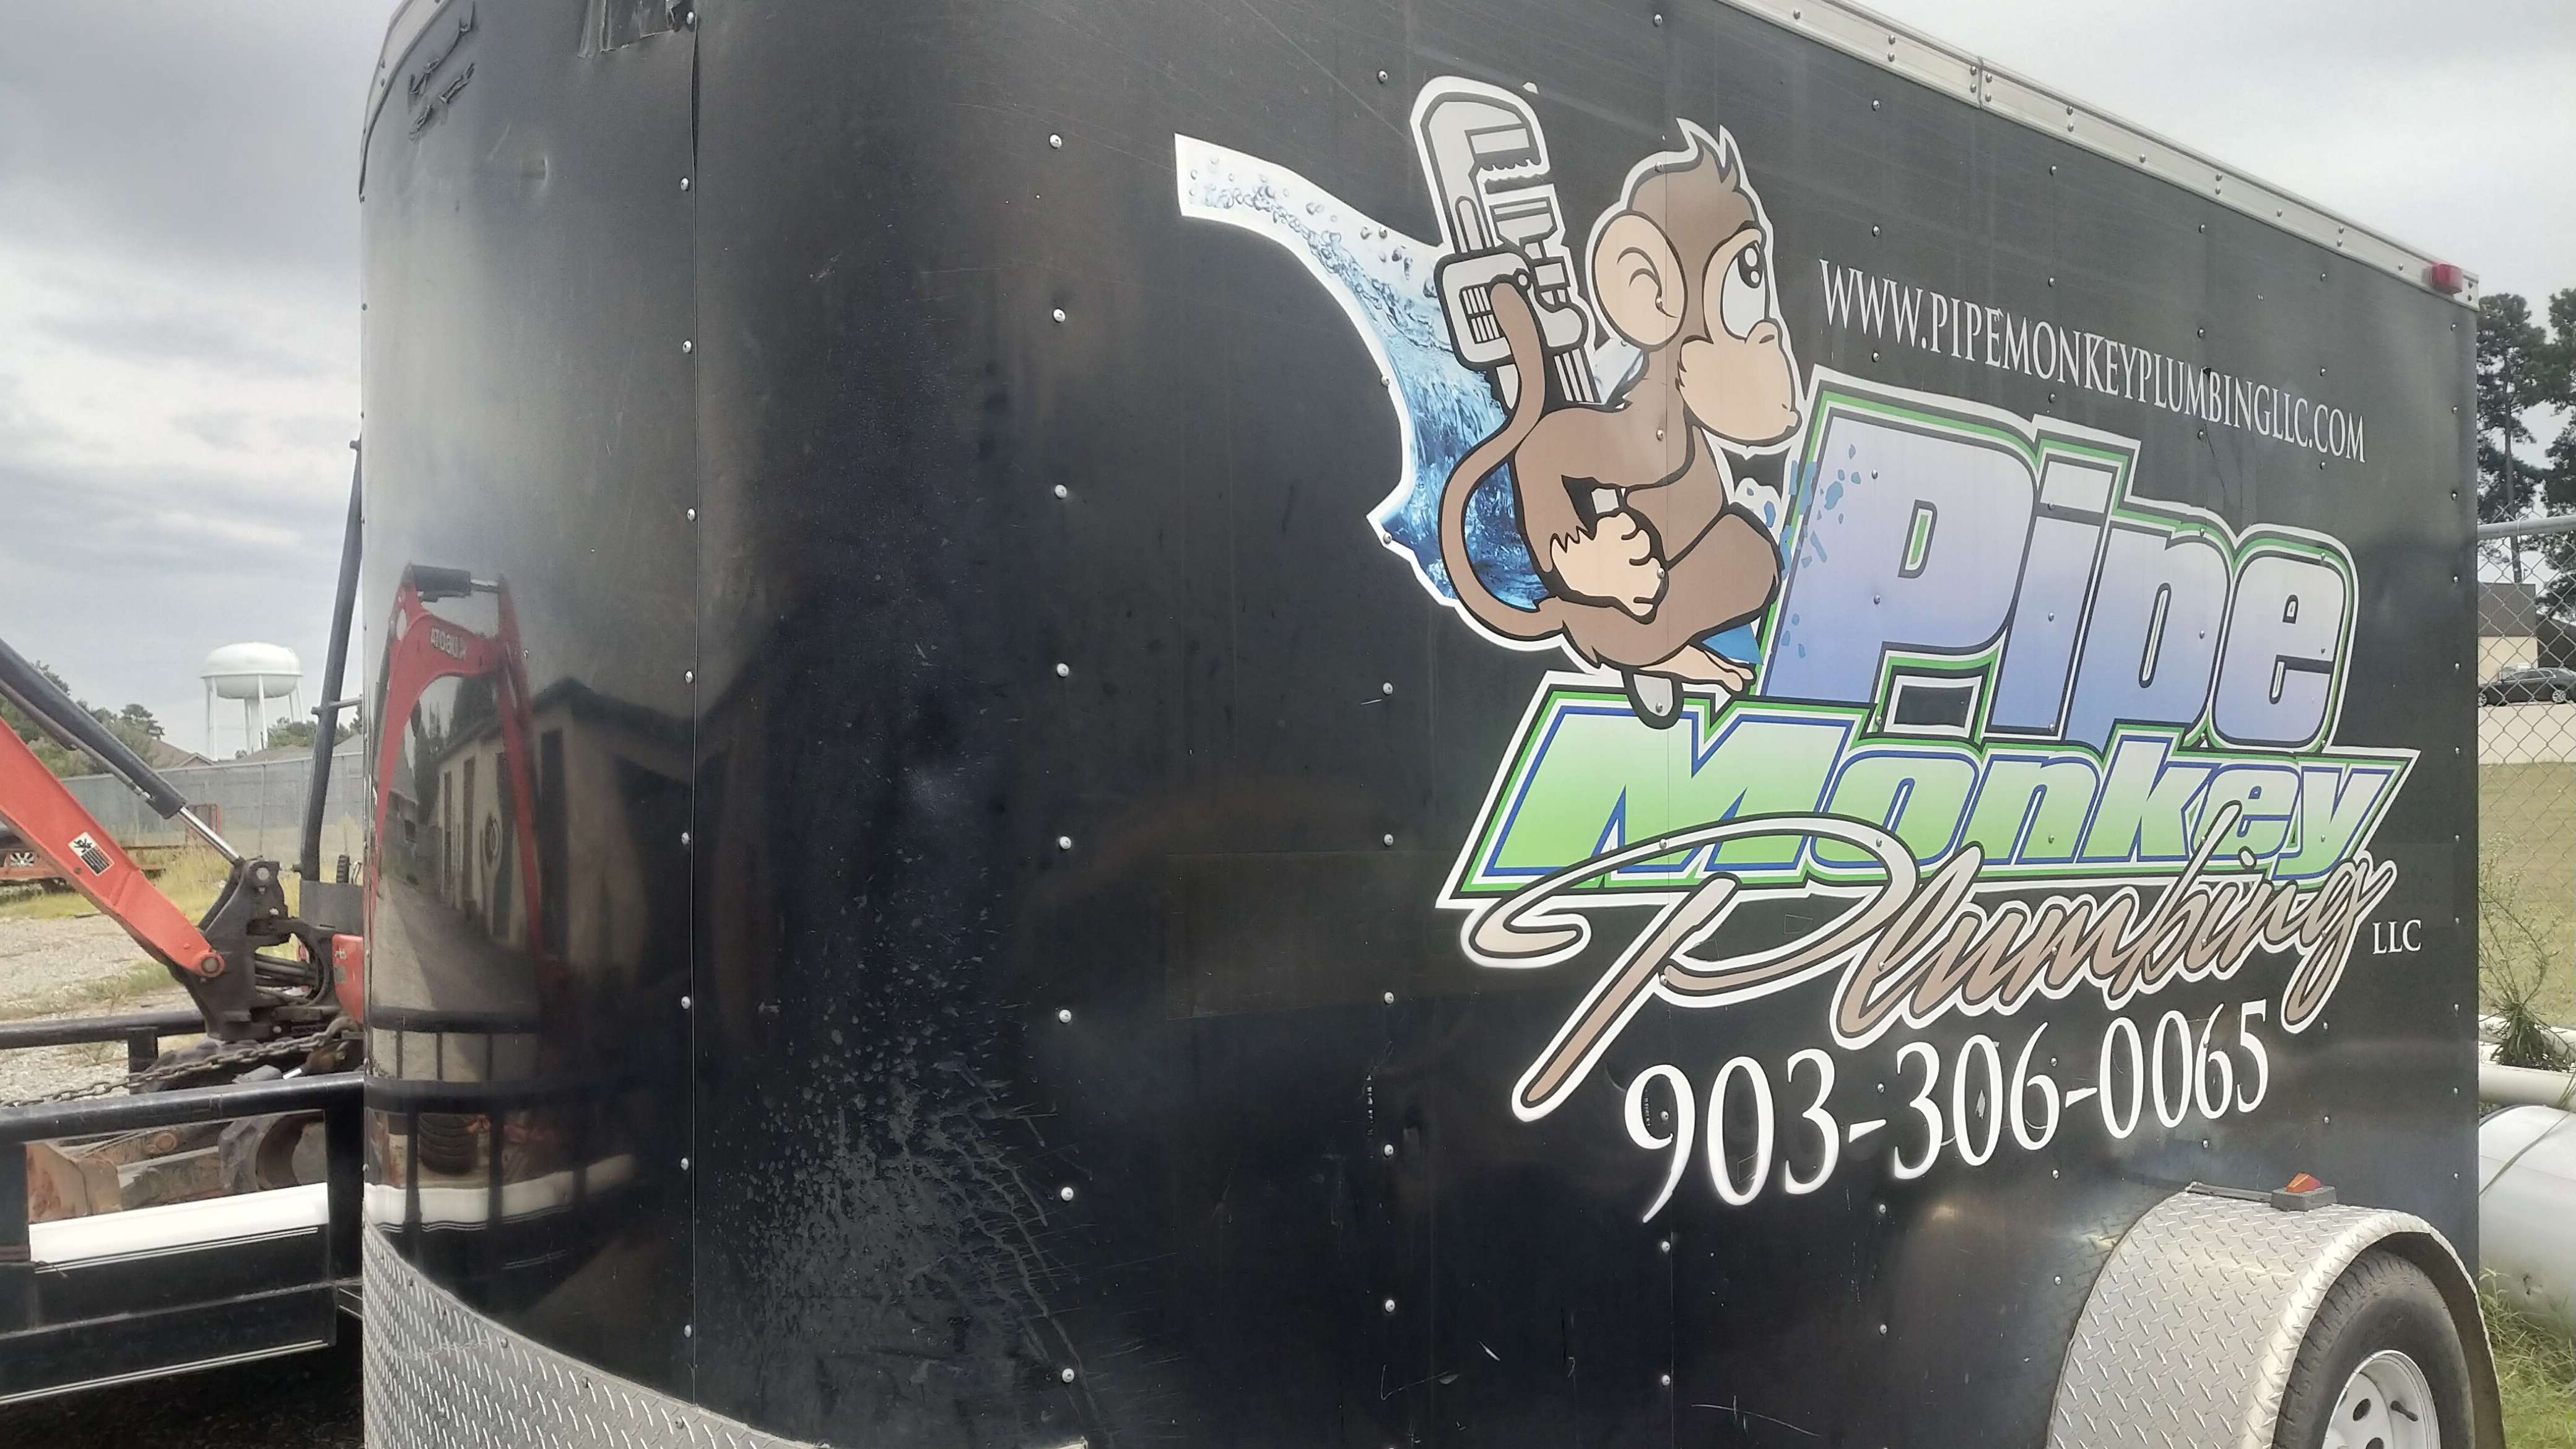 pipe monkey logo on a trailer